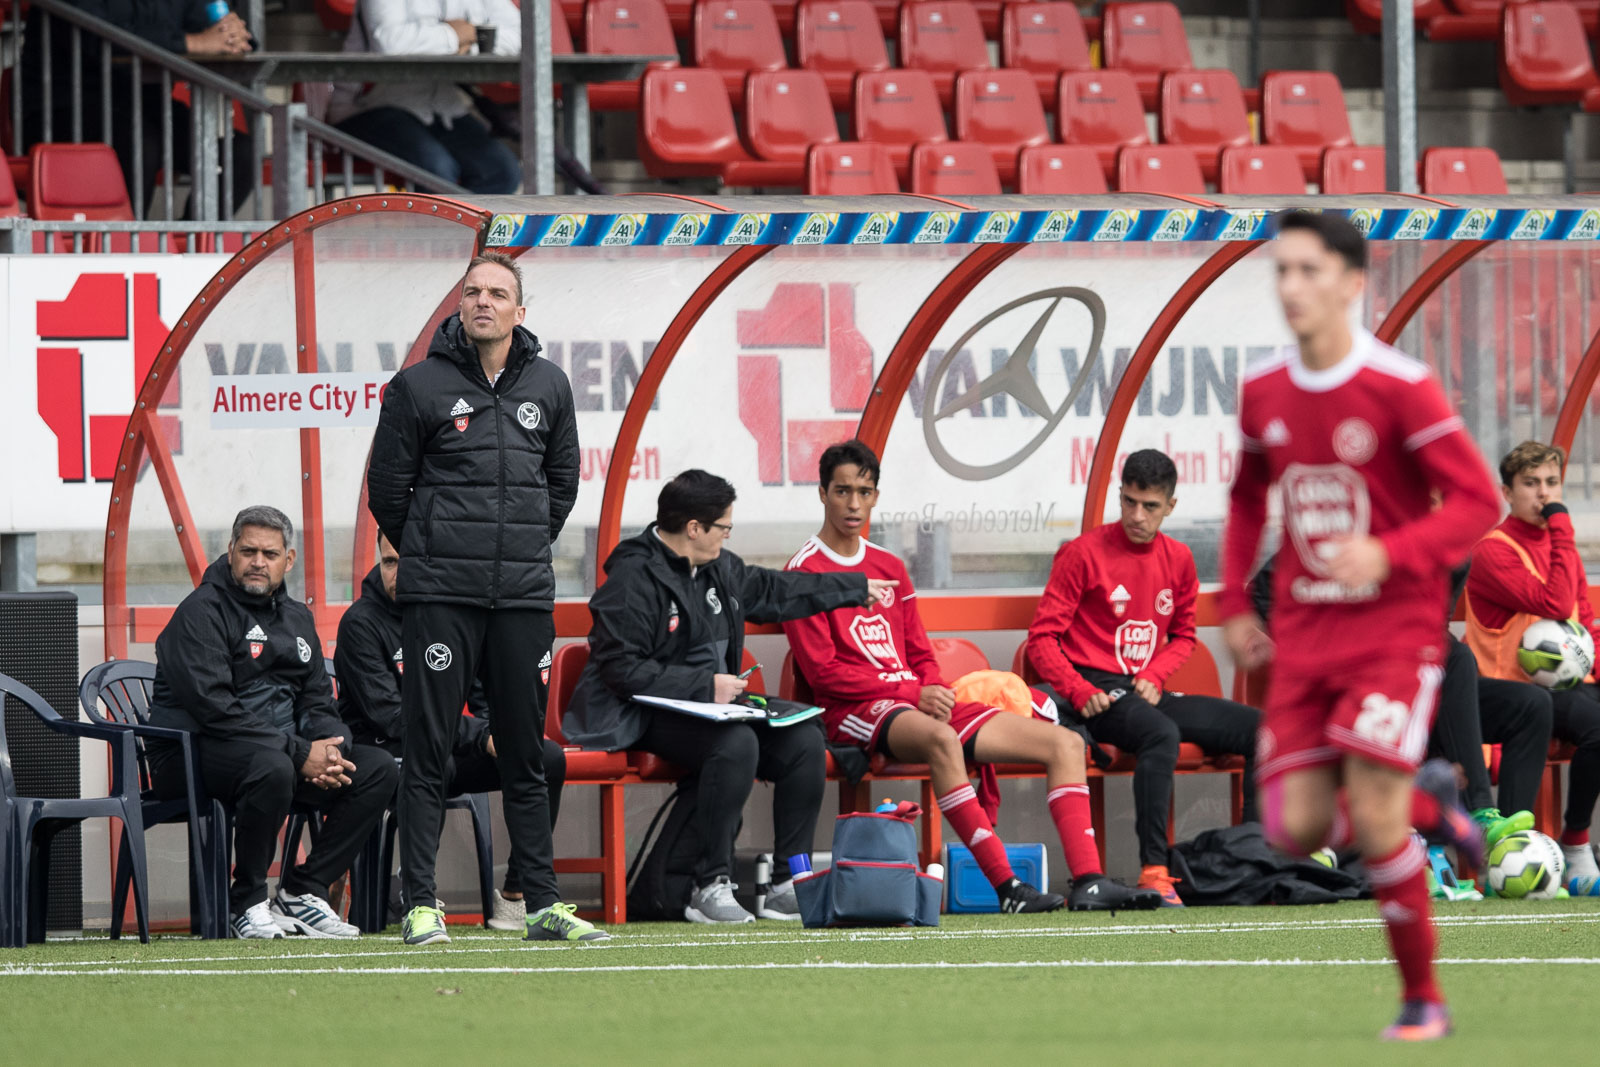 Hoofd jeugdopleiding René Koster neemt afscheid van Almere City FC